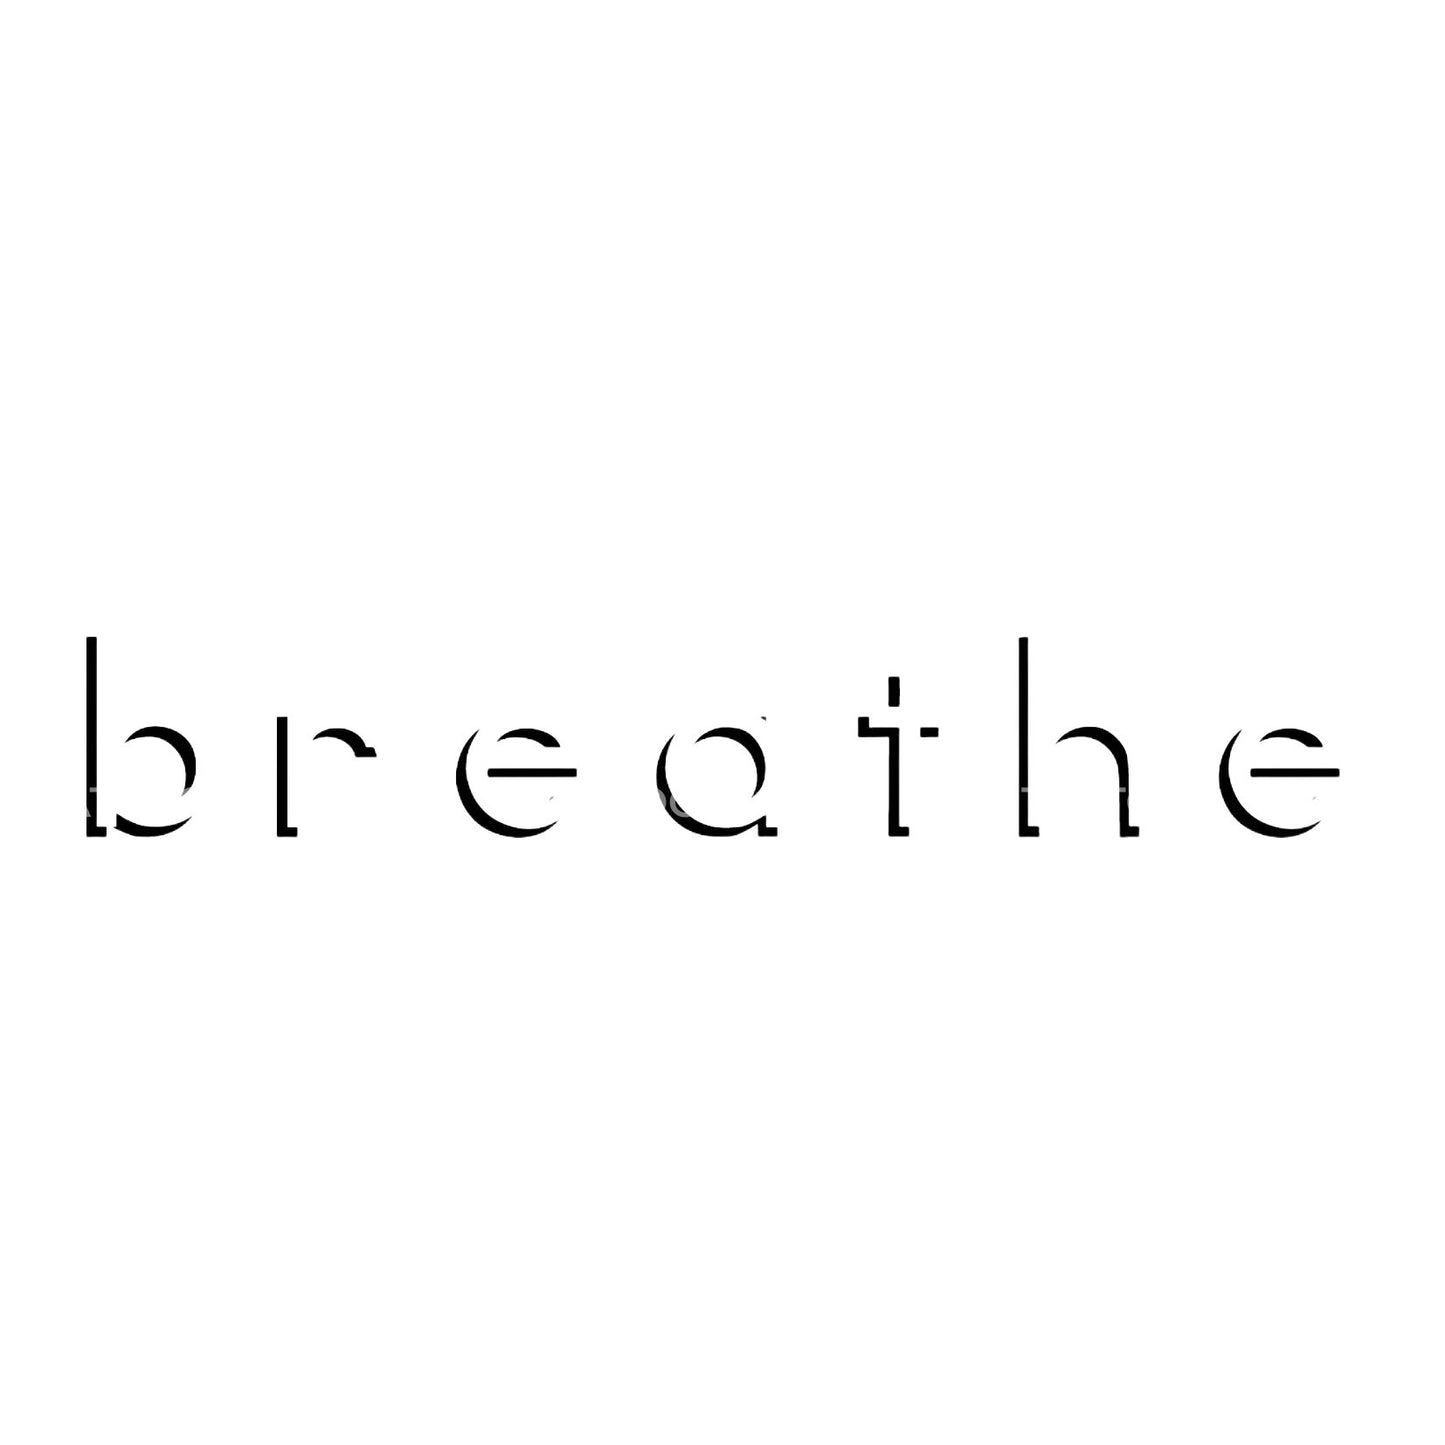 Breathe Cute Lettering Tattoo Design